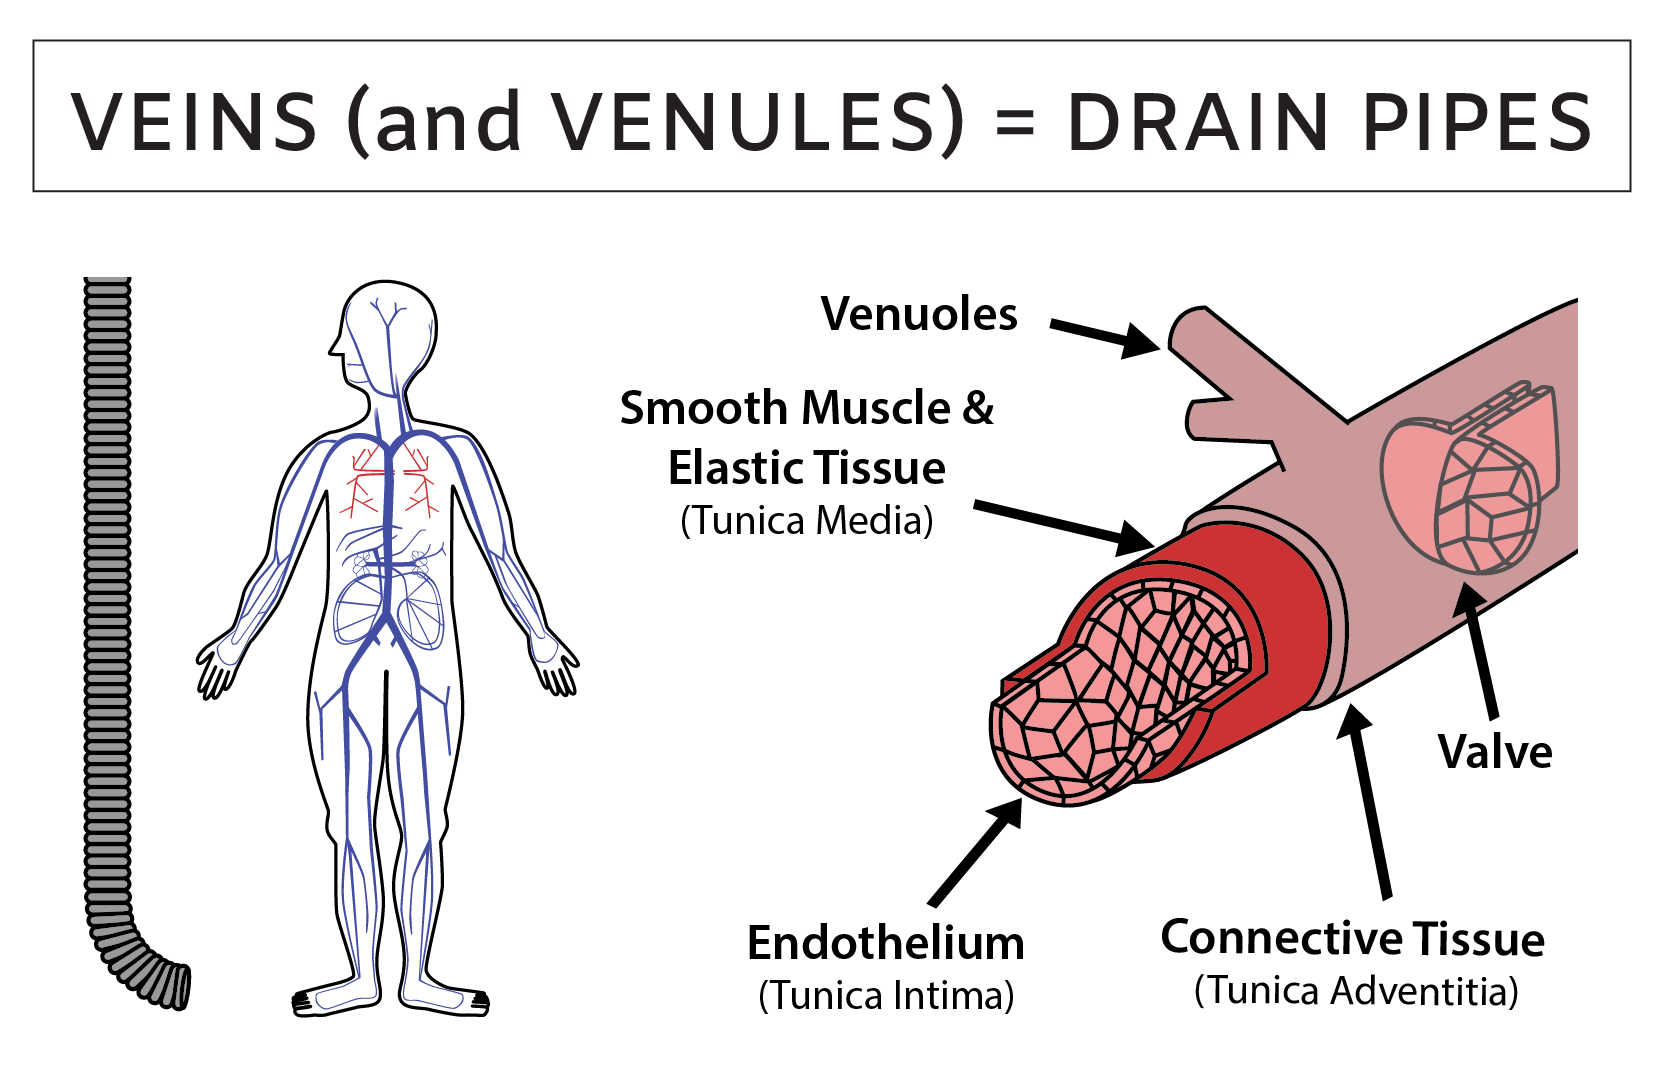 Human veins anatomy and function summary illustration